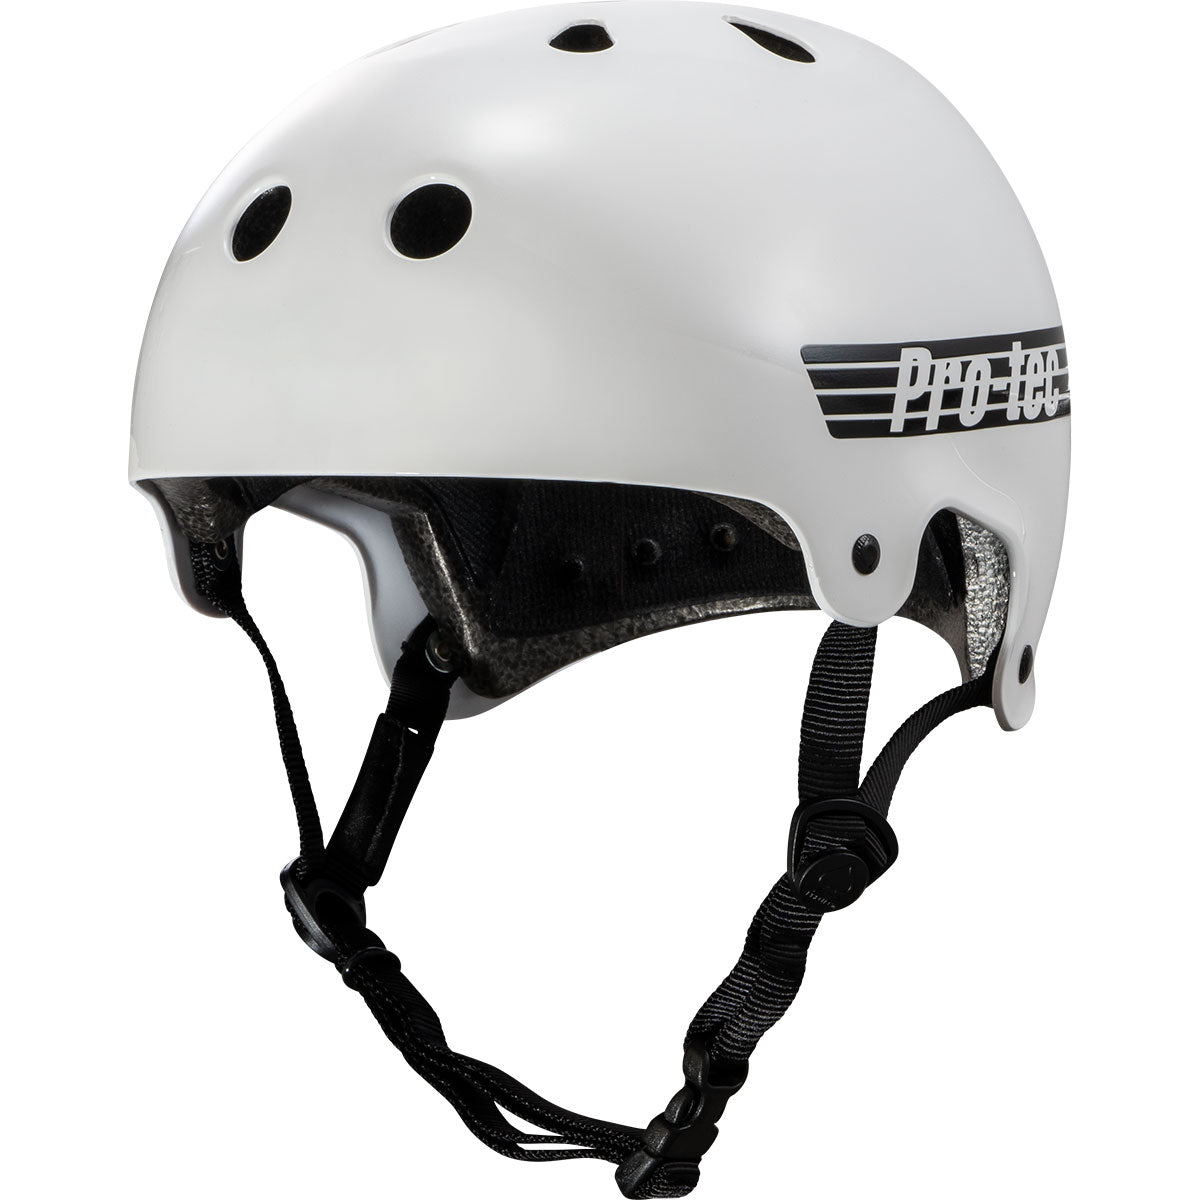 Pro-Tec Old School Certified Helmet - Gloss White image 1